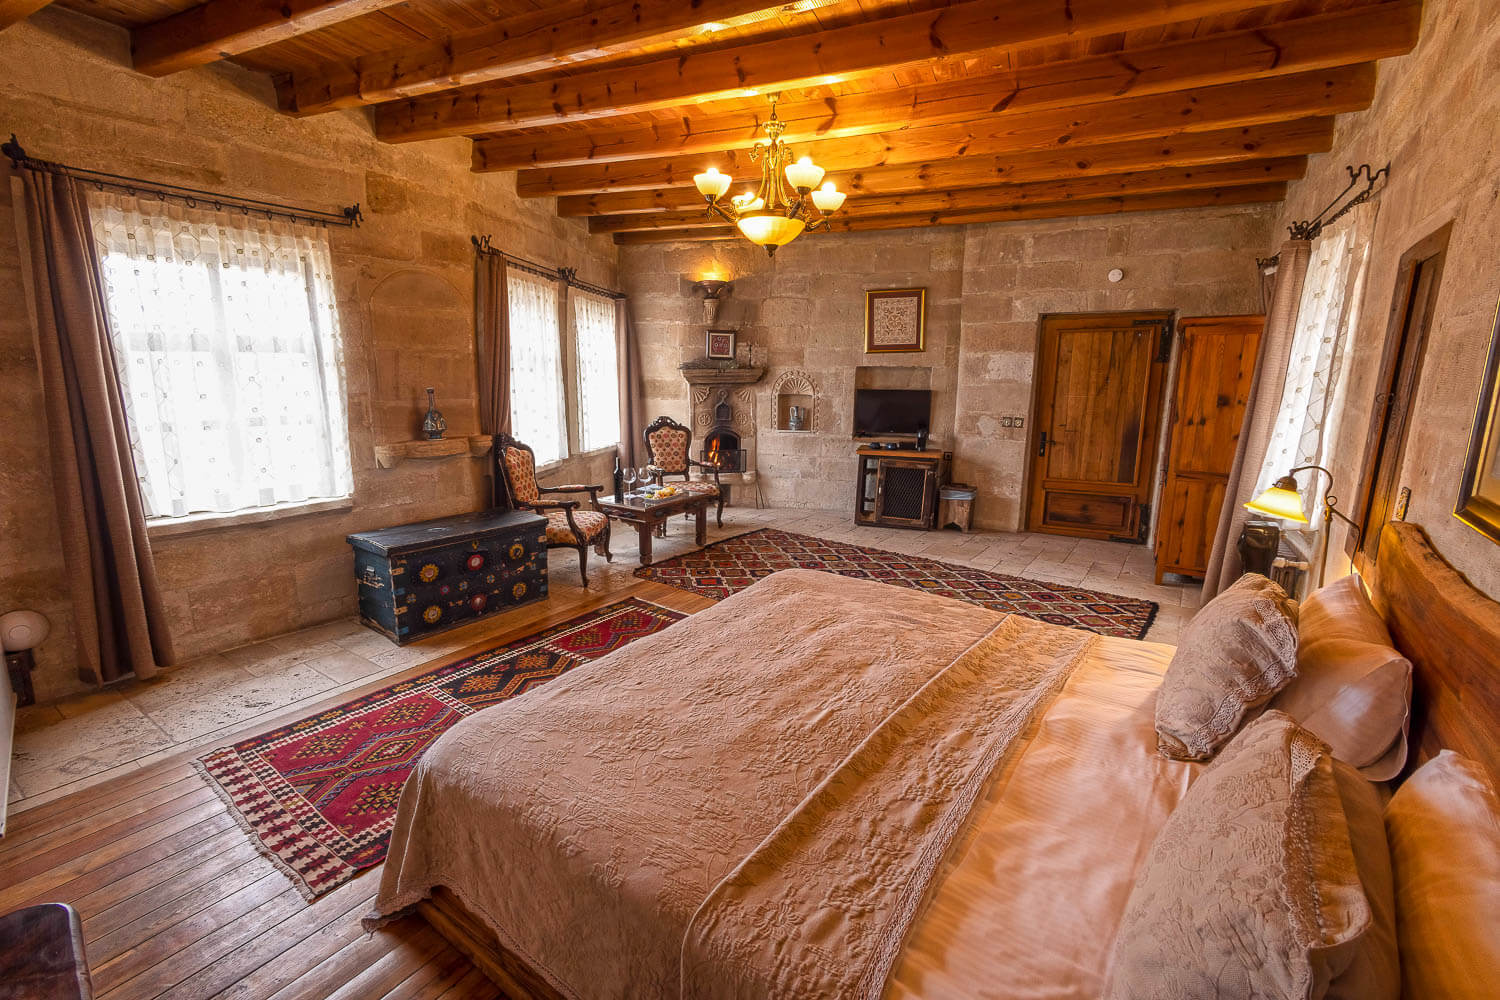 Sultan Cave Suites in Göreme, one of the Best Hotels in Cappadocia